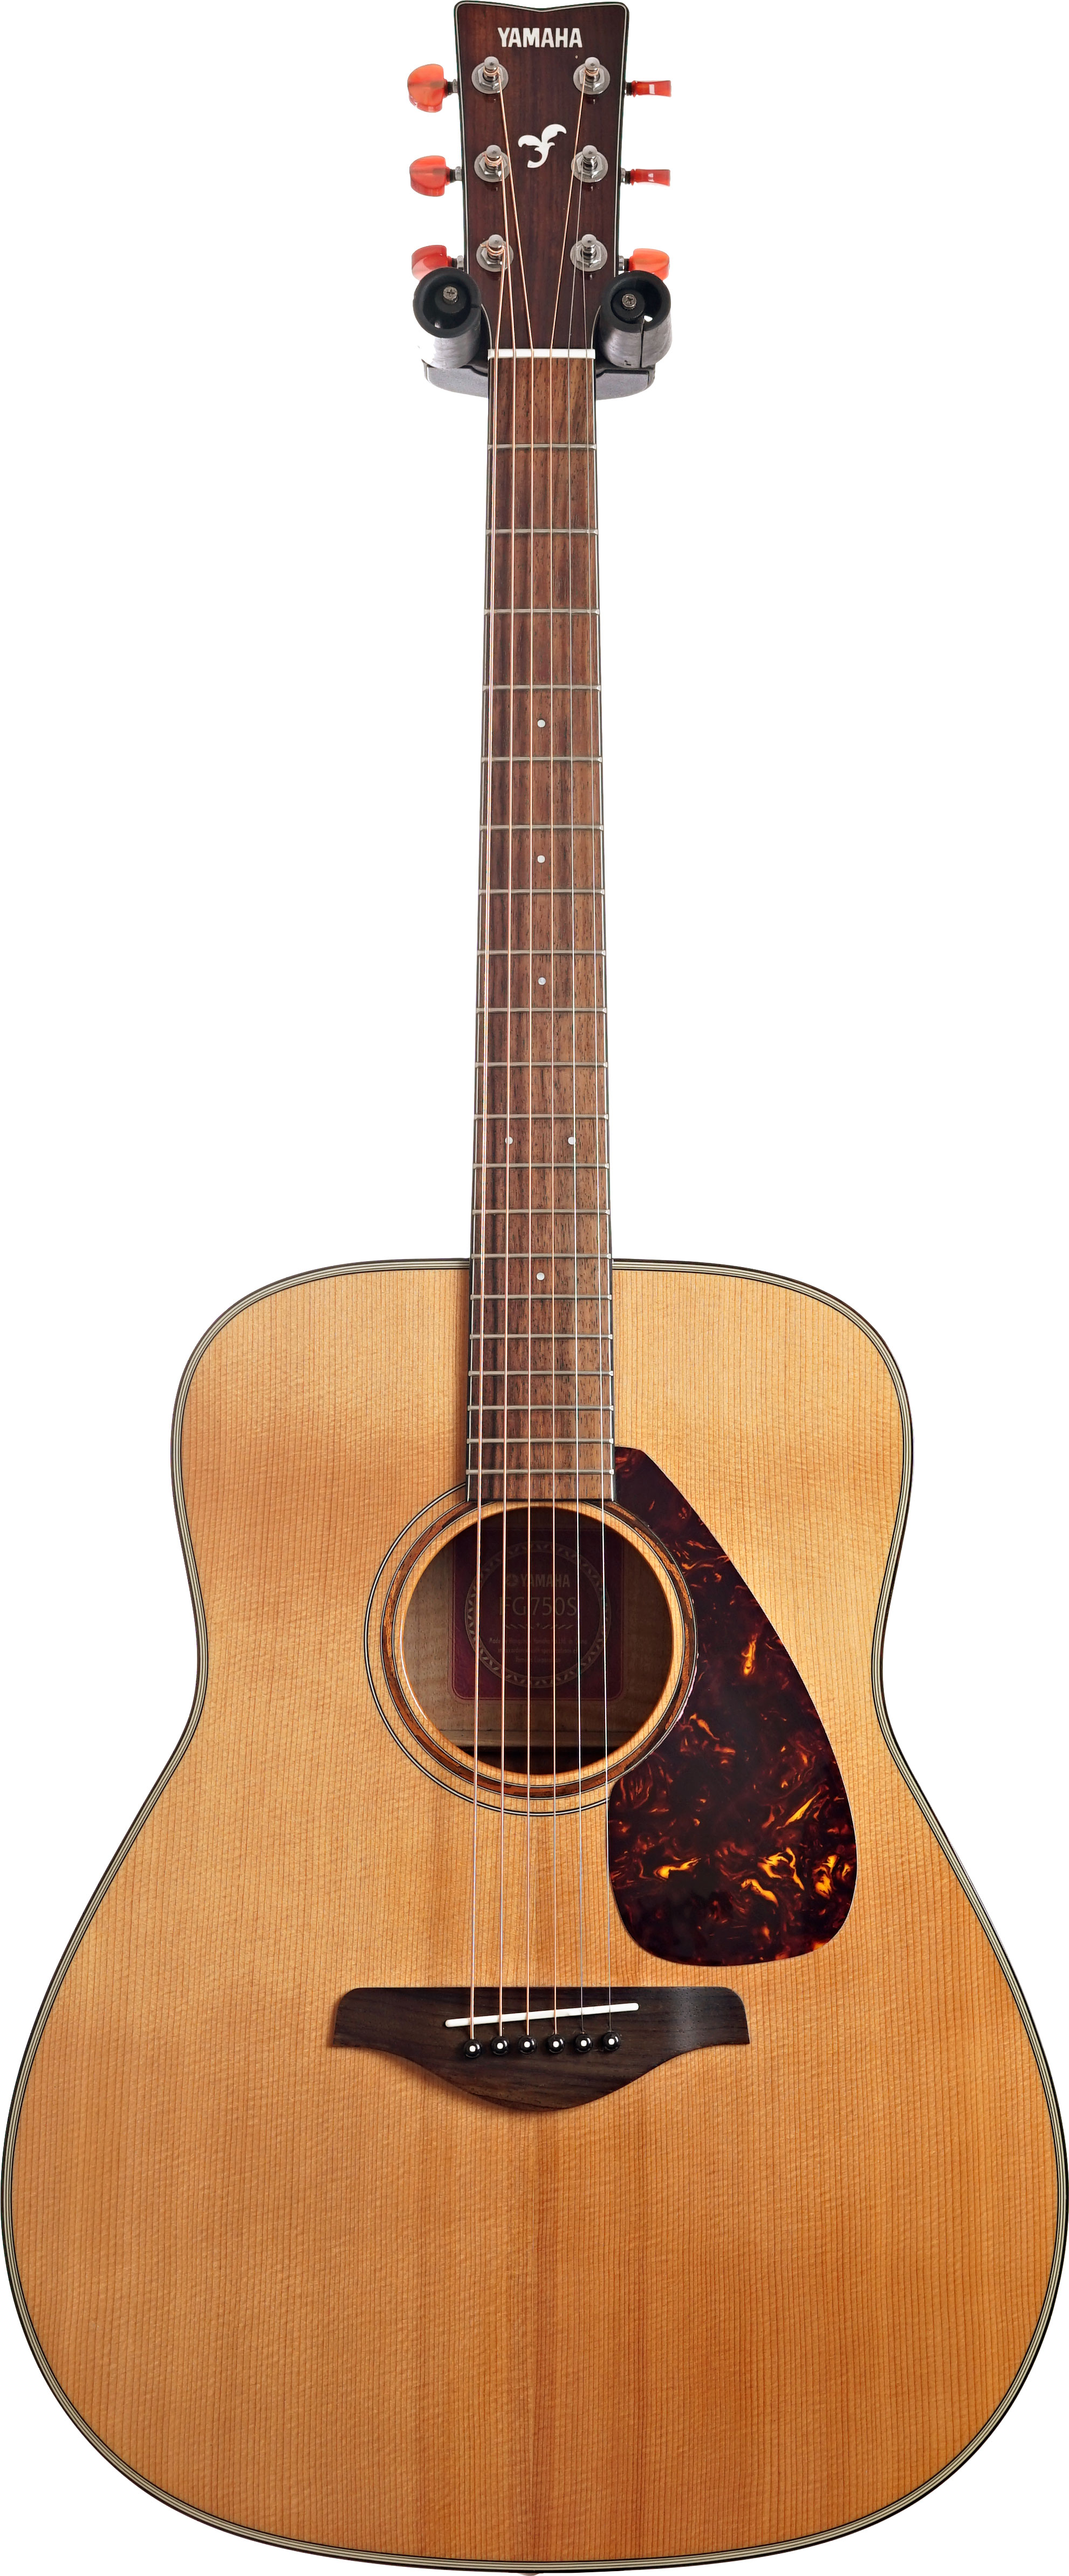 YAMAHA FG750S アコースティックギター - 楽器/器材